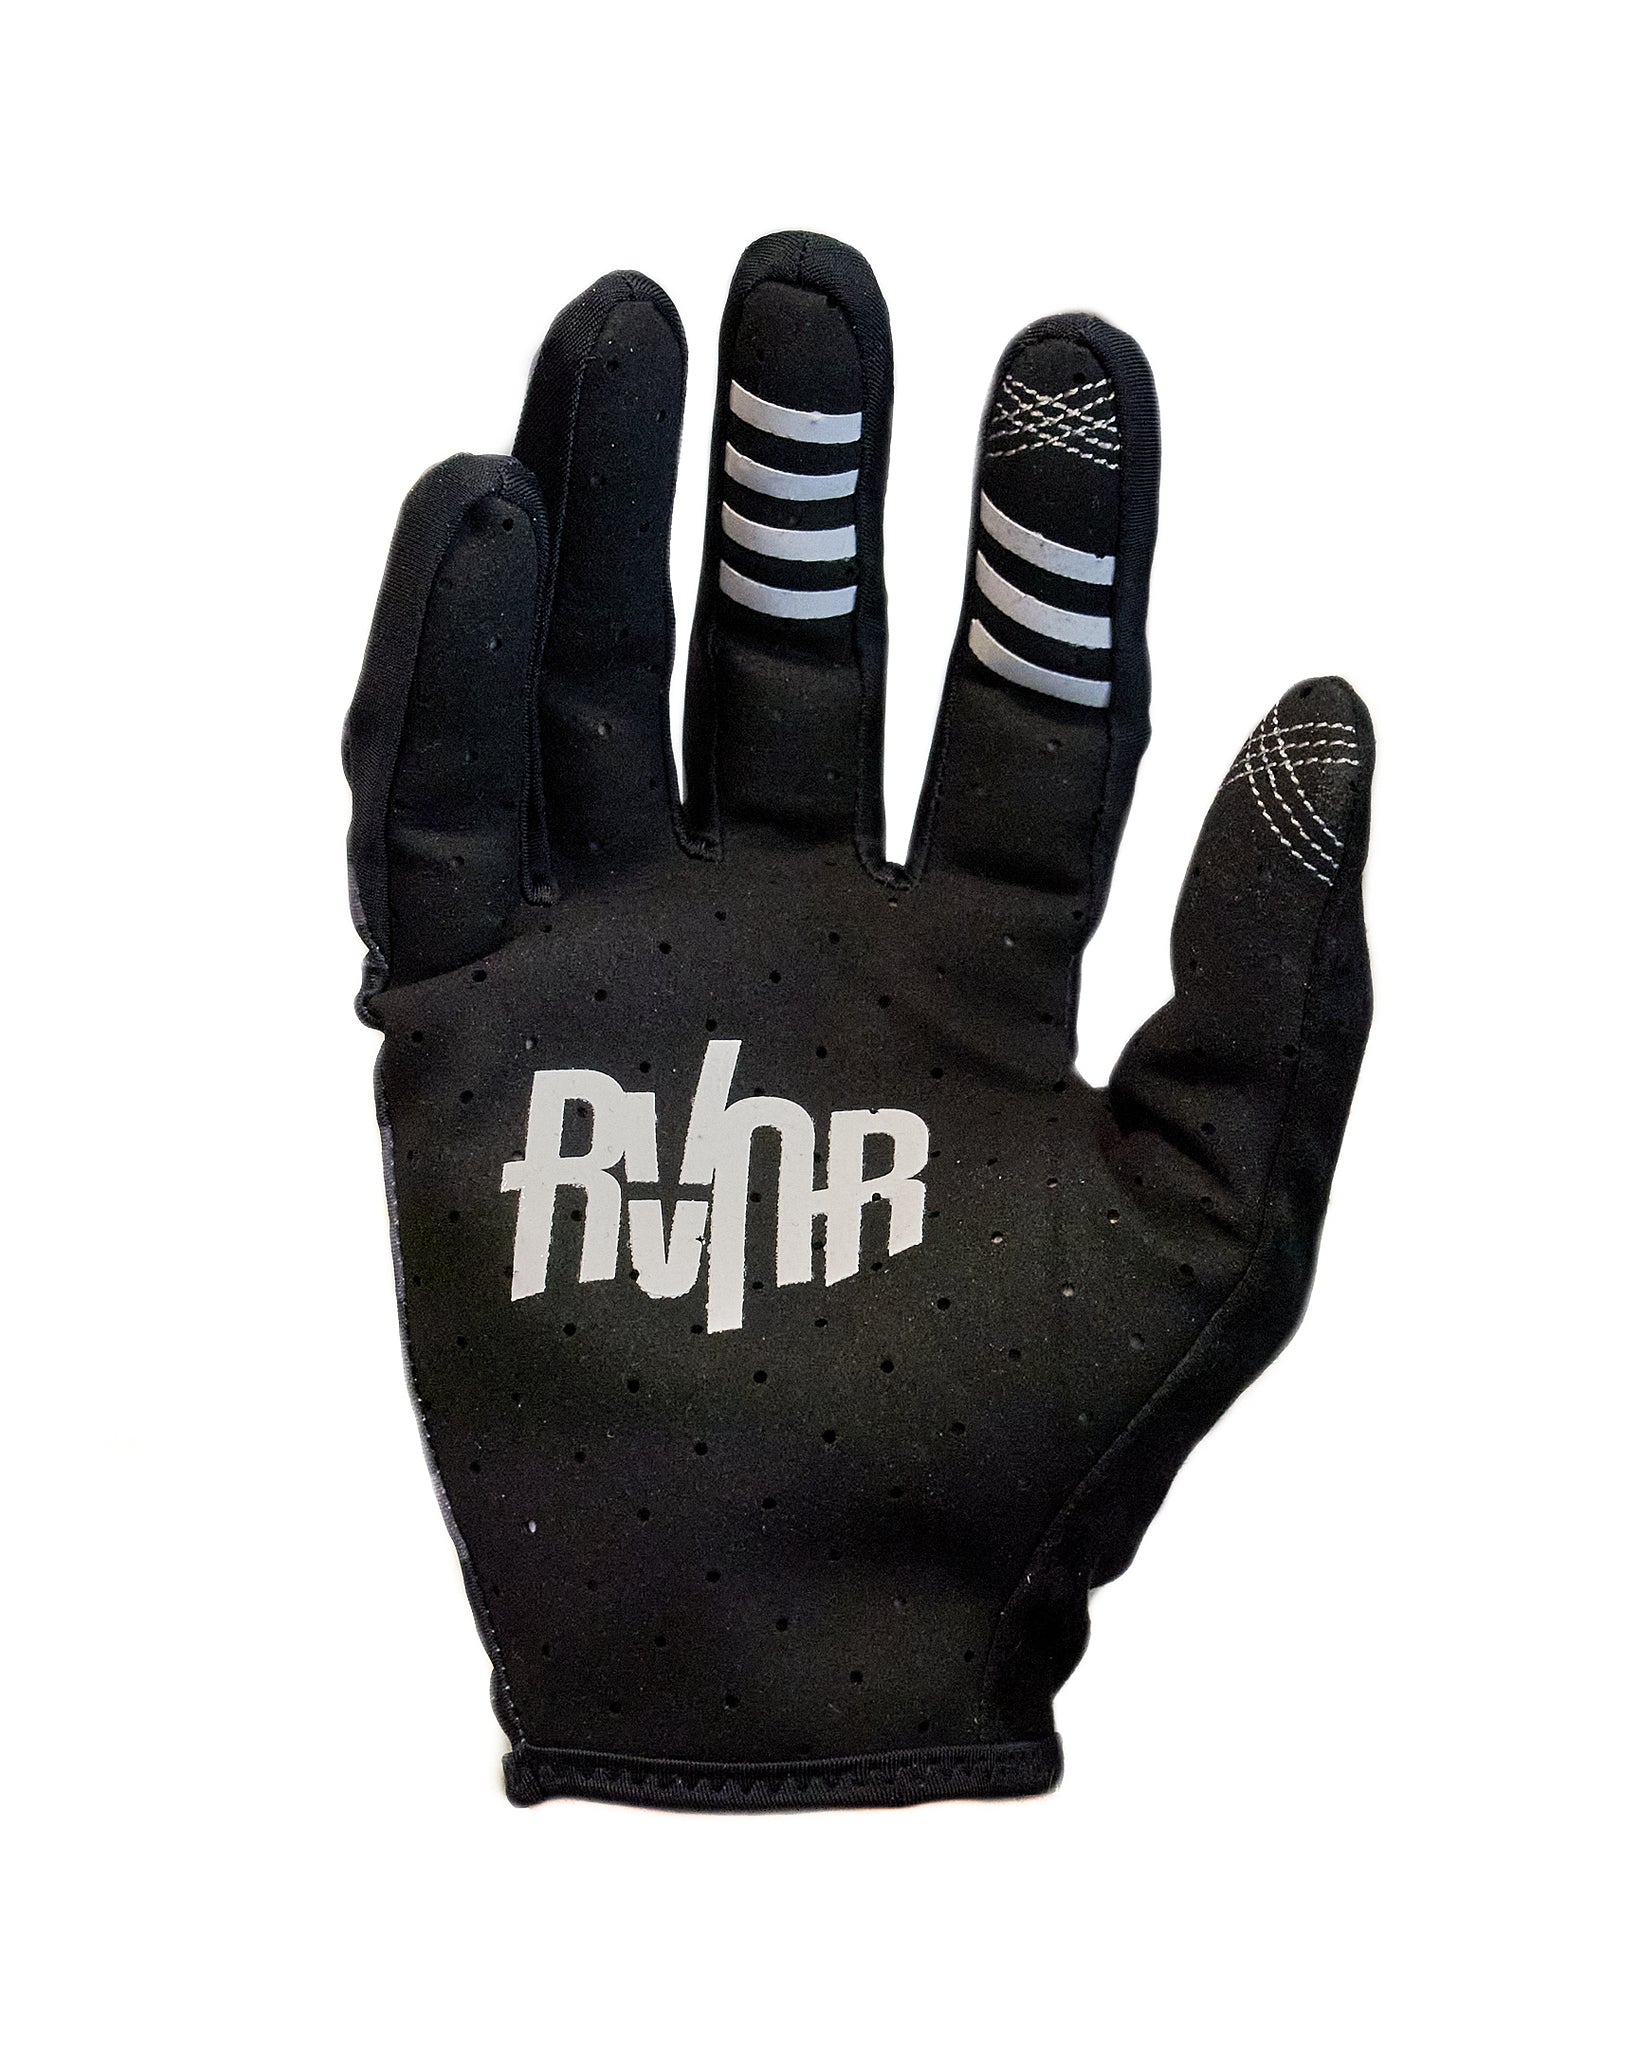 RVNR Camo Air Glove